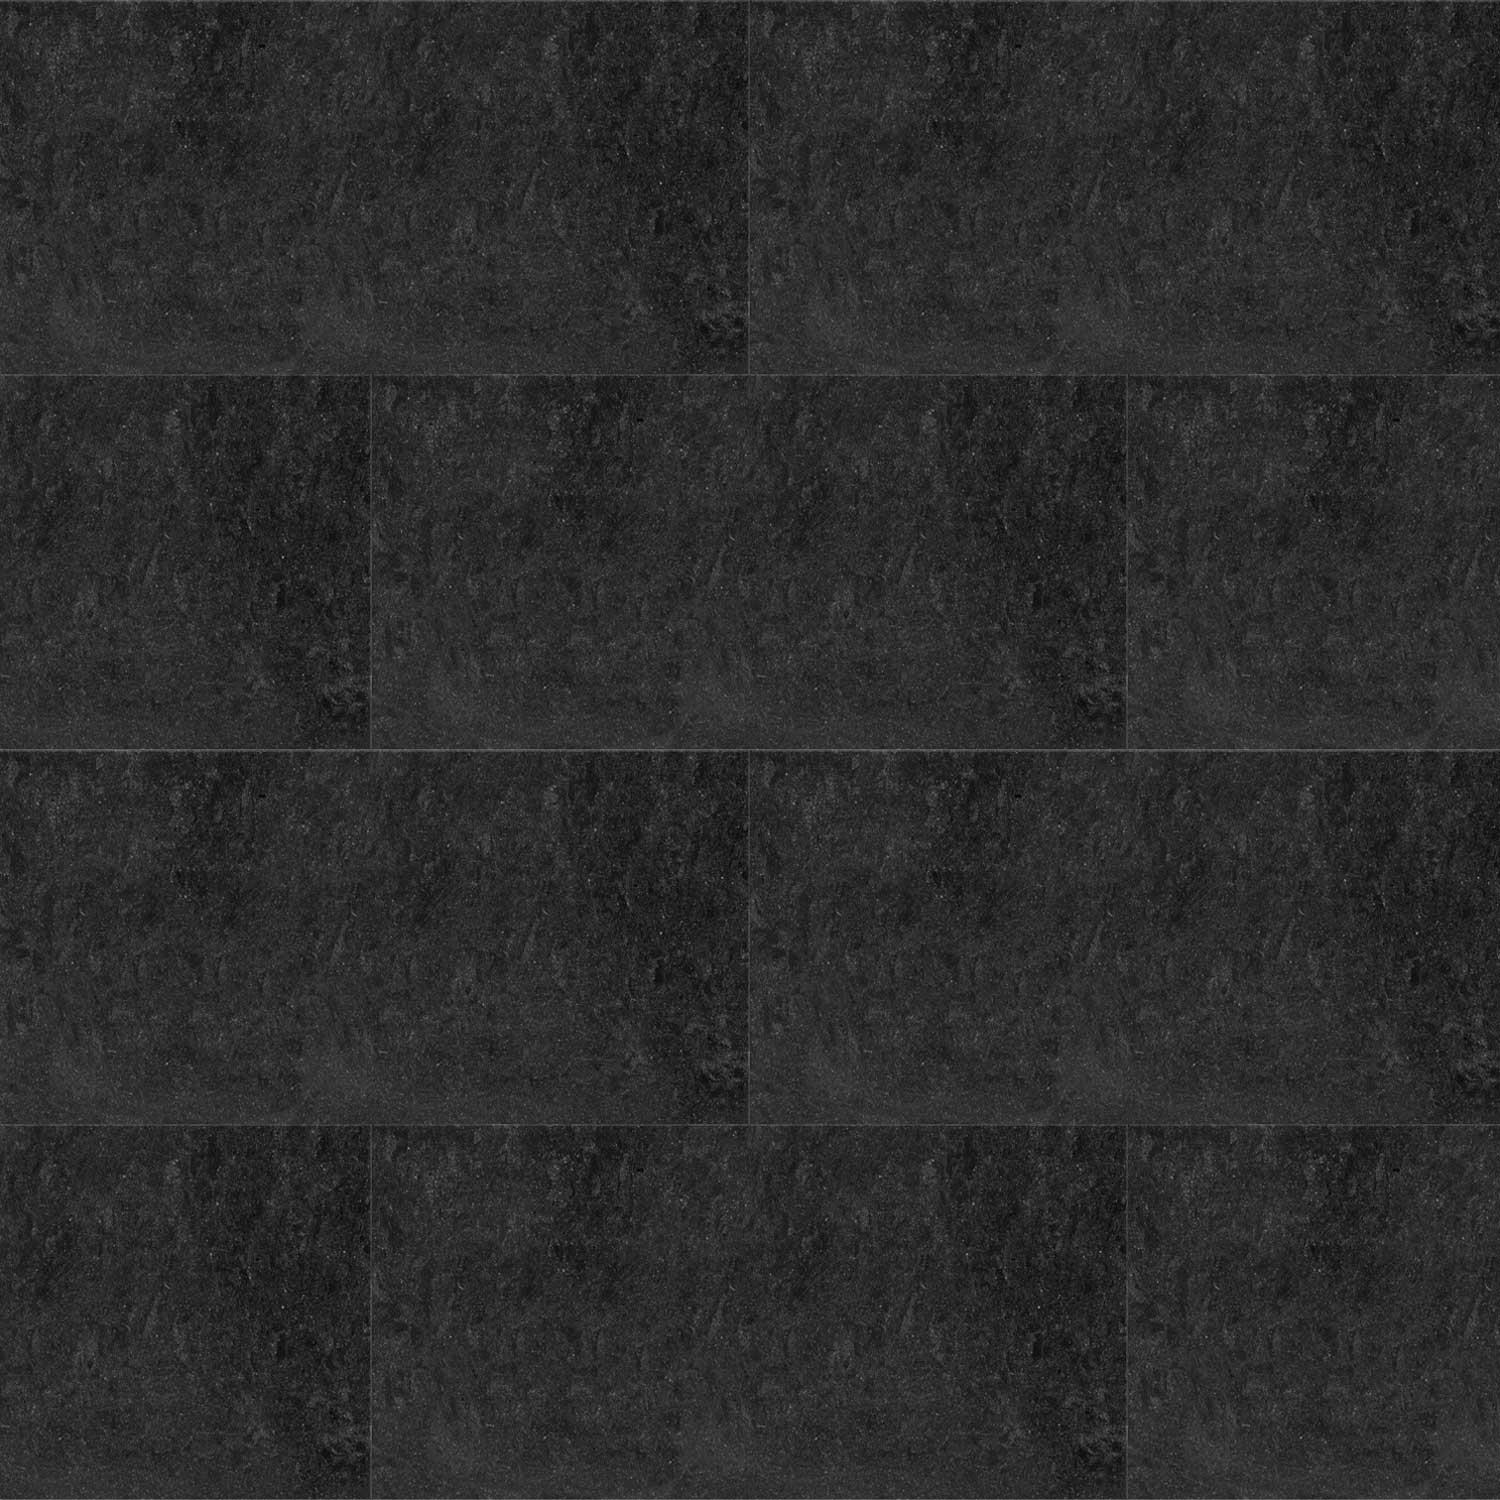 RAK Lounge Black Porcelain Tile Matt Concrete Effect 300x600mm